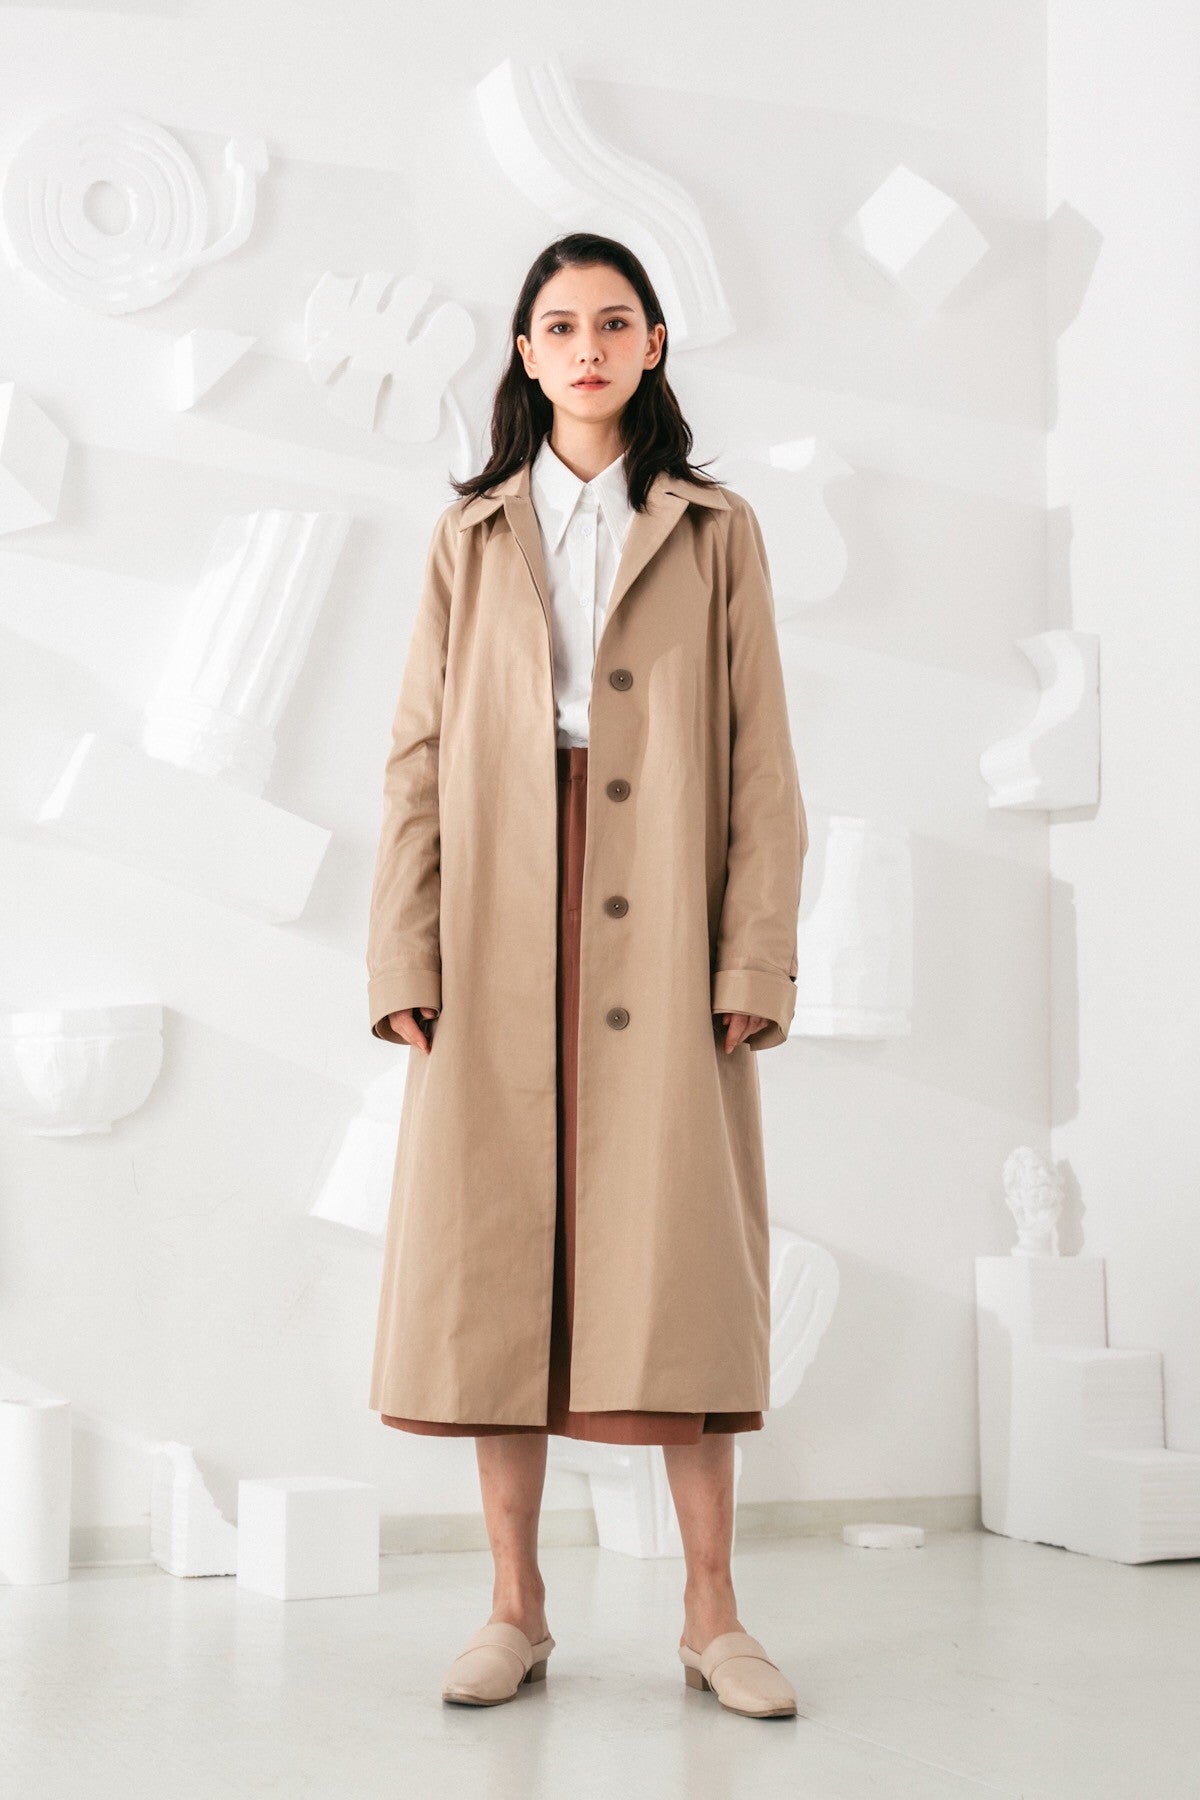 SKYE San Francisco SF shop ethical modern minimalist quality women clothing fashion Coraline Trench Coat beige 2